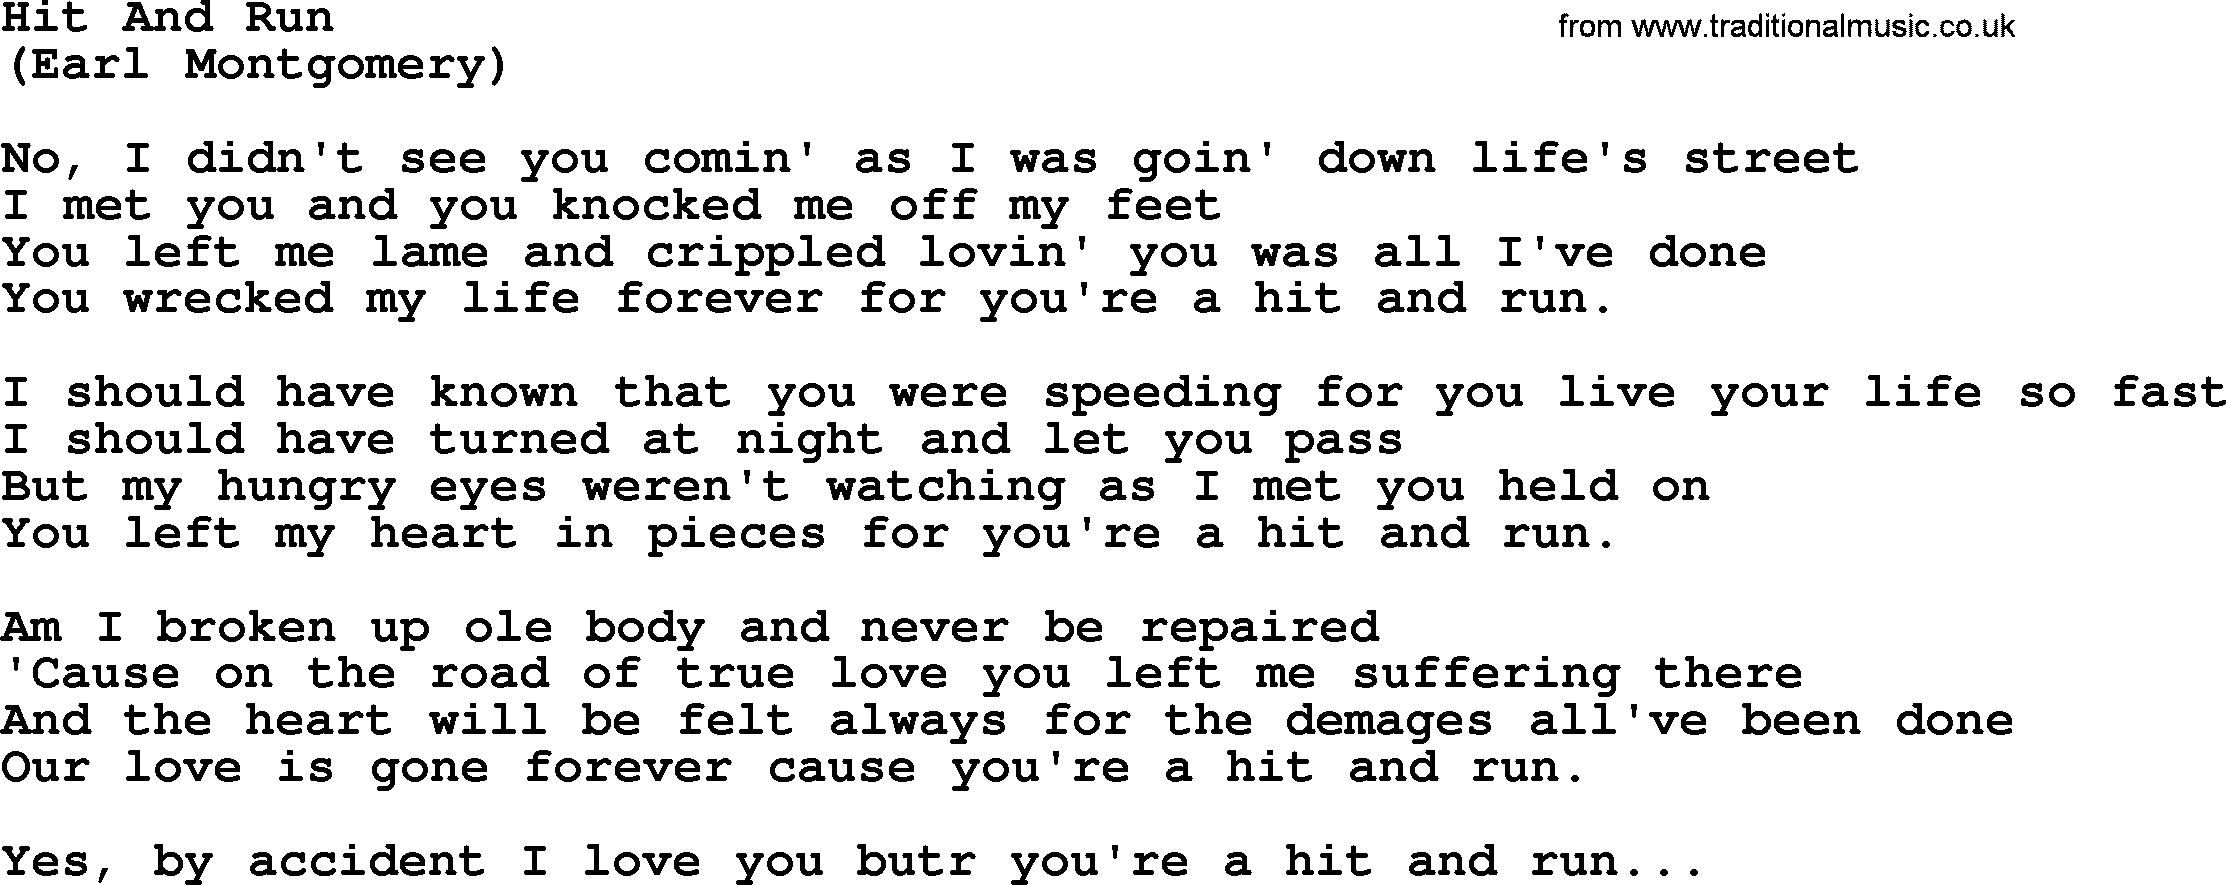 George Jones song: Hit And Run, lyrics